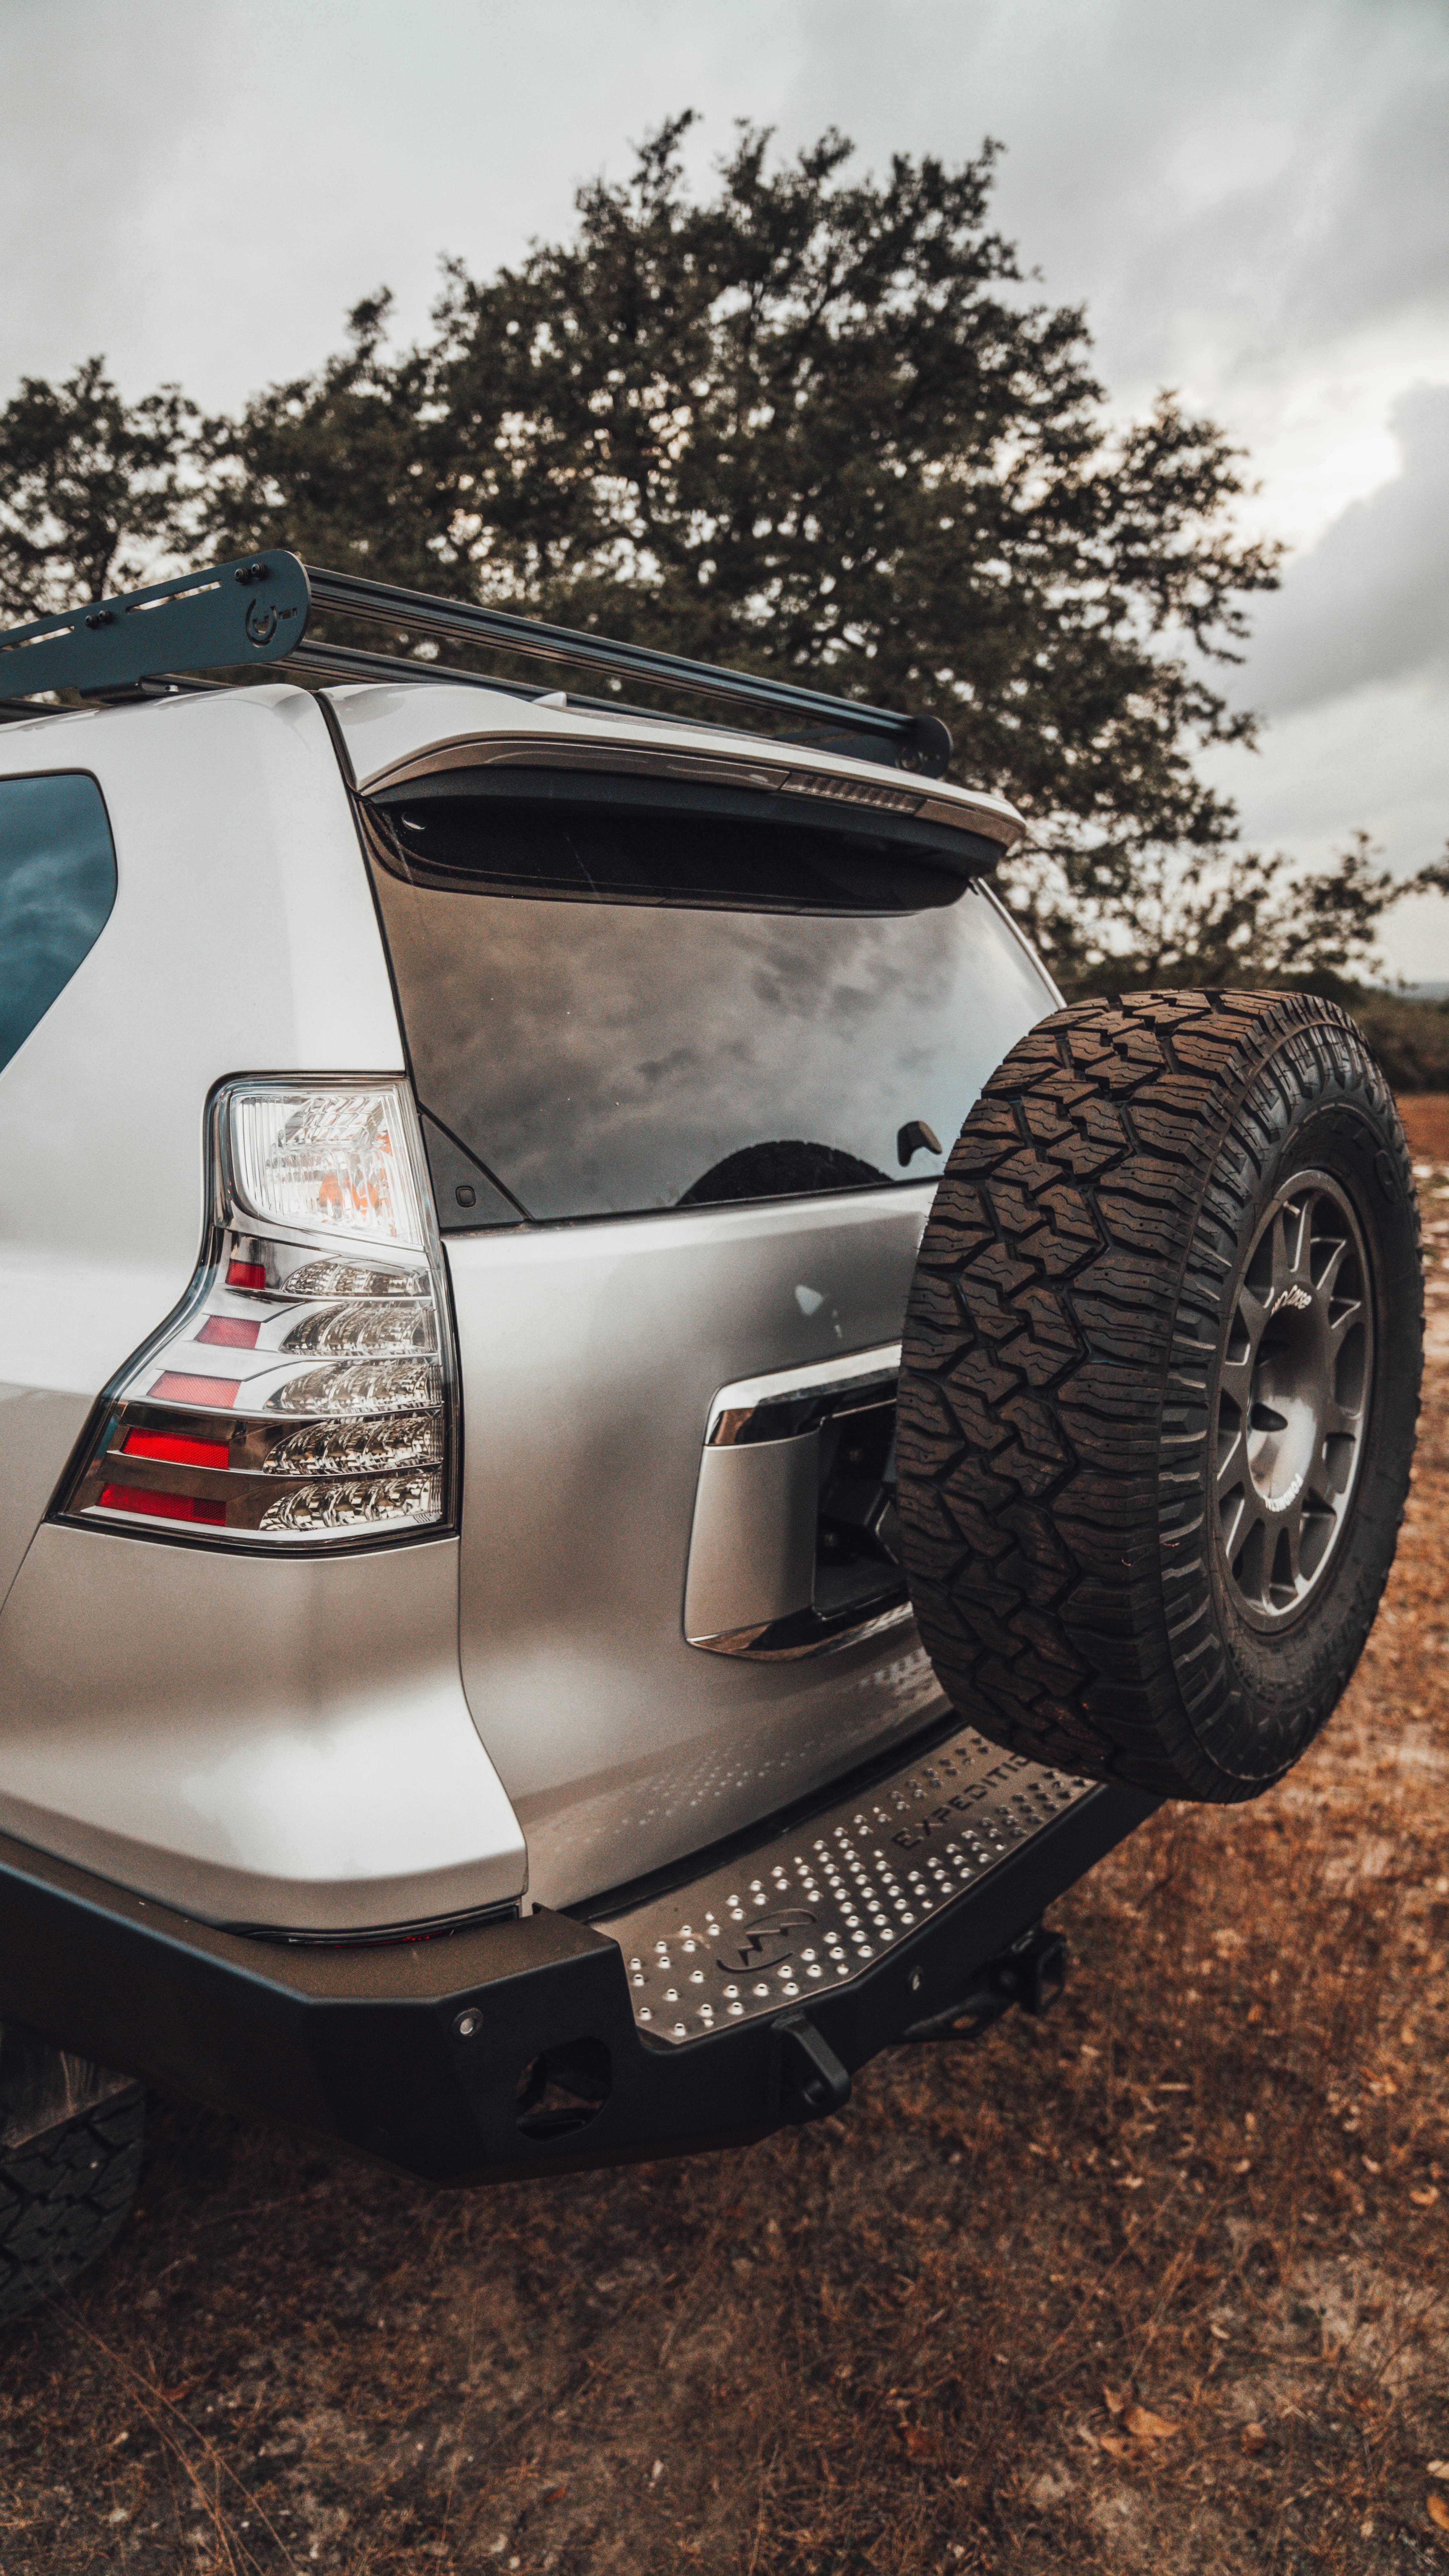 2018 Lexus GX 460 Base in Silver with Dobinson Suspension 2" Lift Kit, Warn Winch, CBI Roof Rack, Rock Slider Steps, Evo Corse Fondmetal Wheels, Expedition Rear Bumper, Metal Tech Front Bumper